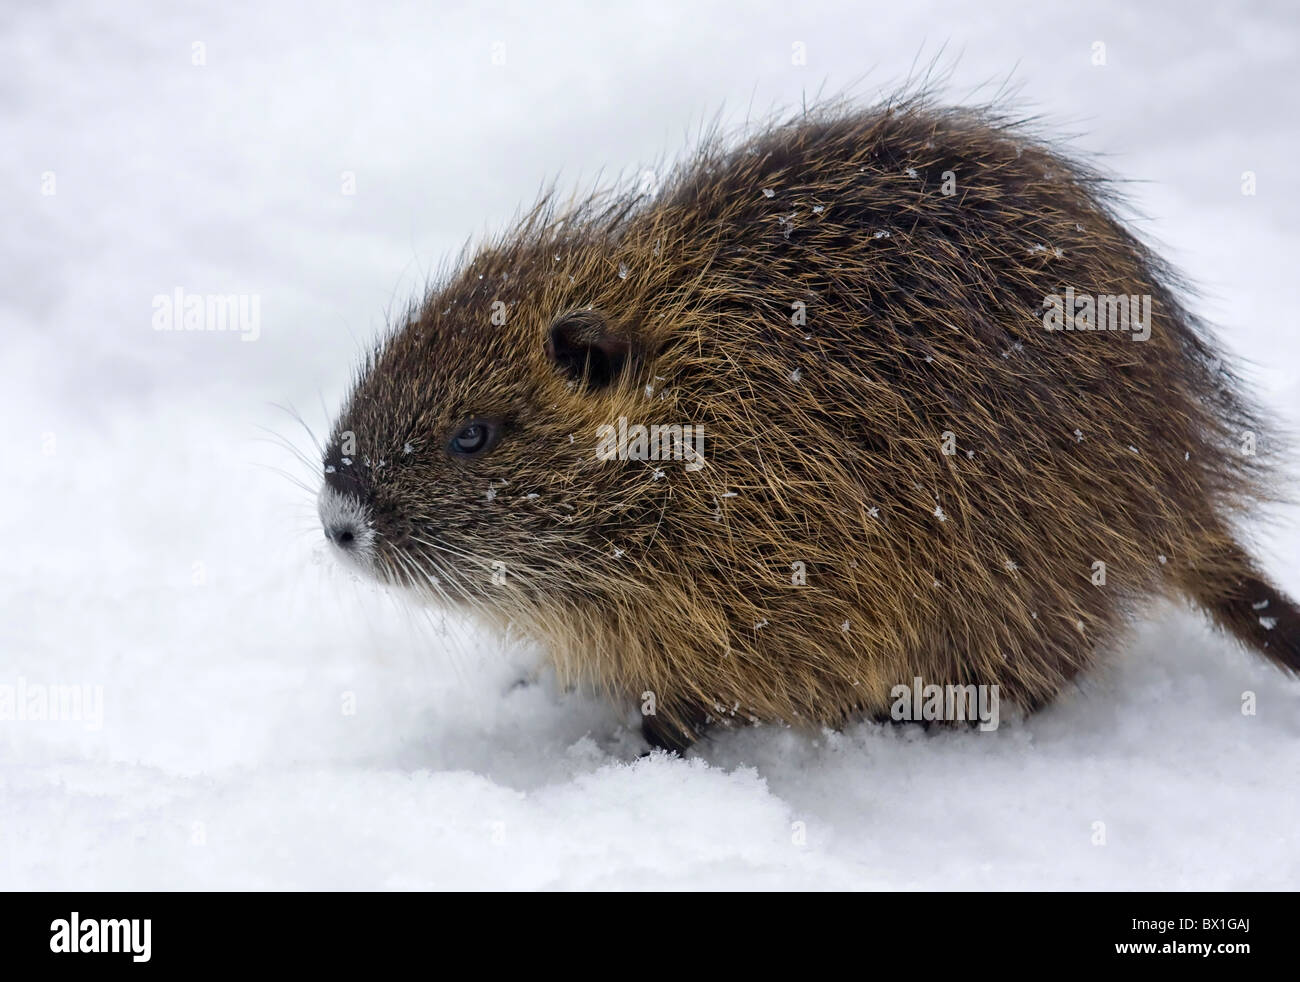 Nutria nella neve - Myocastor coypus Foto Stock